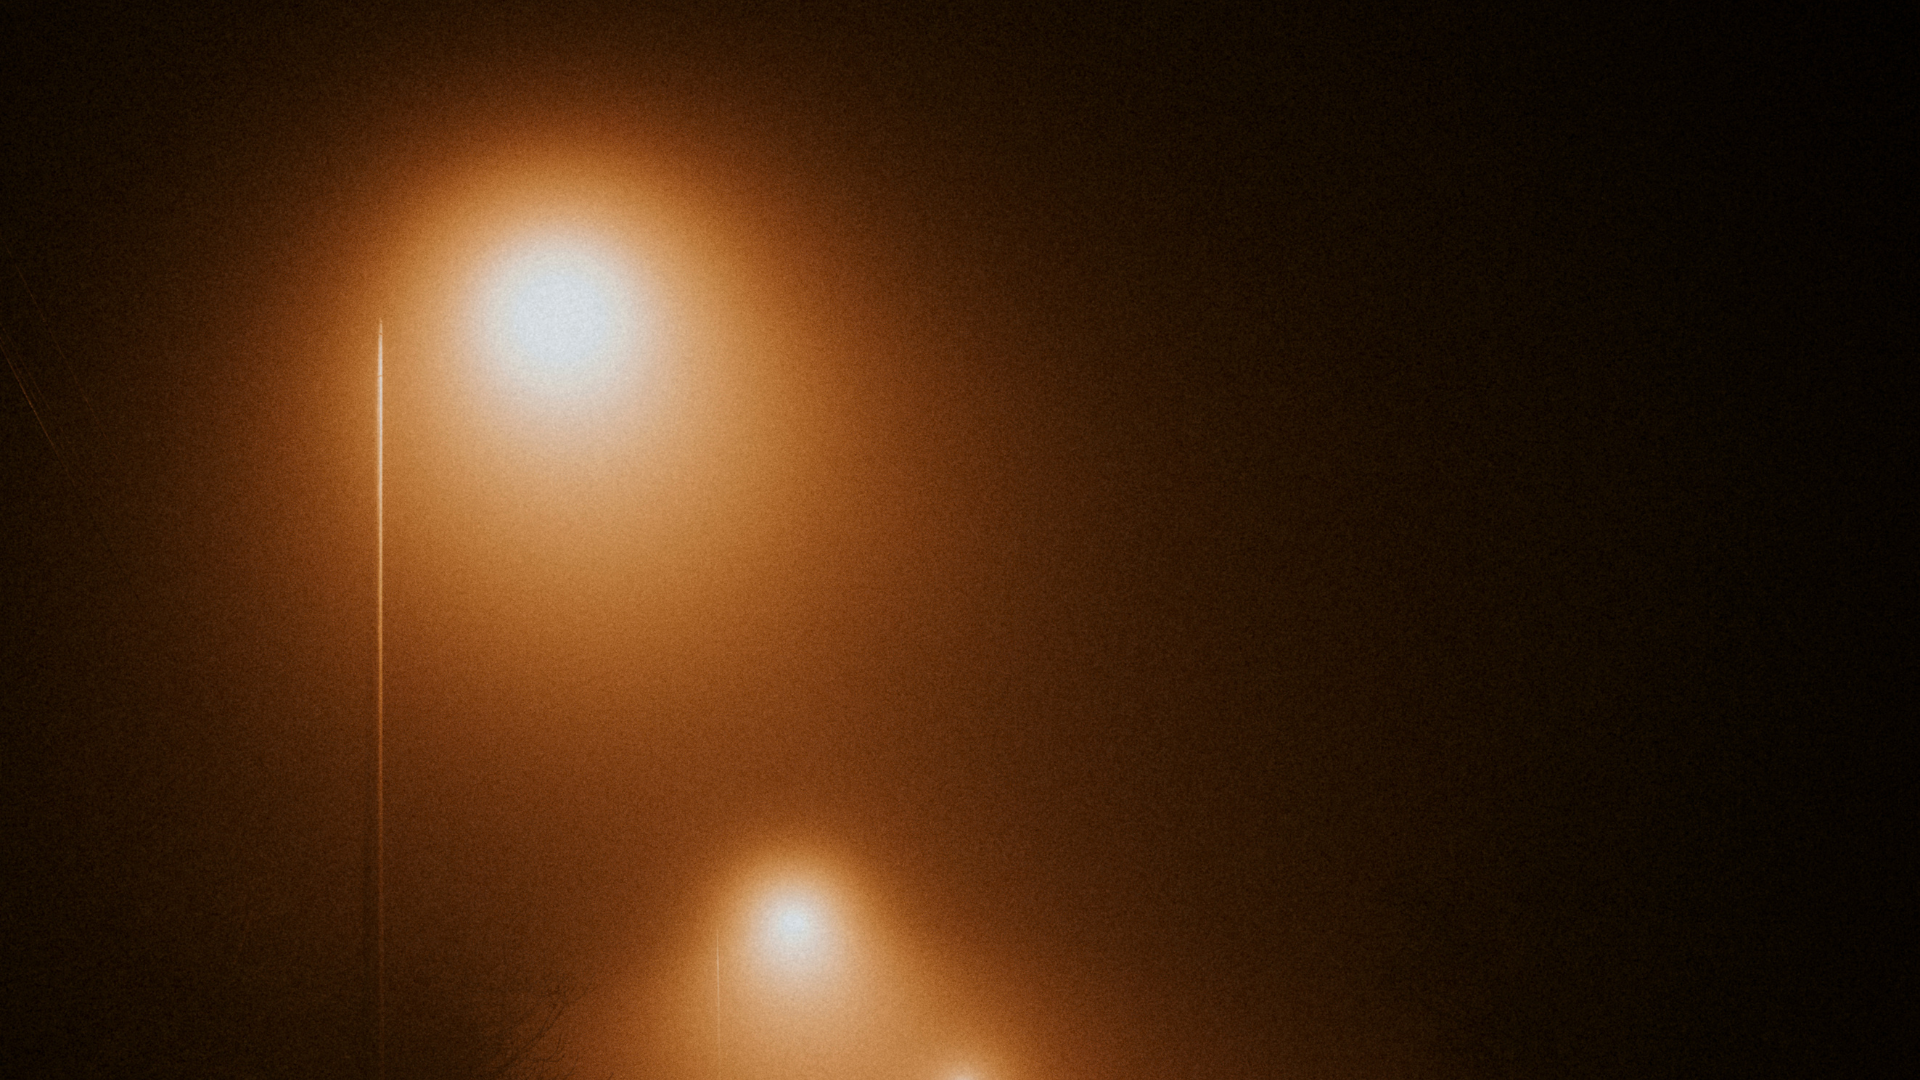 A close up of a streetlight on a misty dark evening